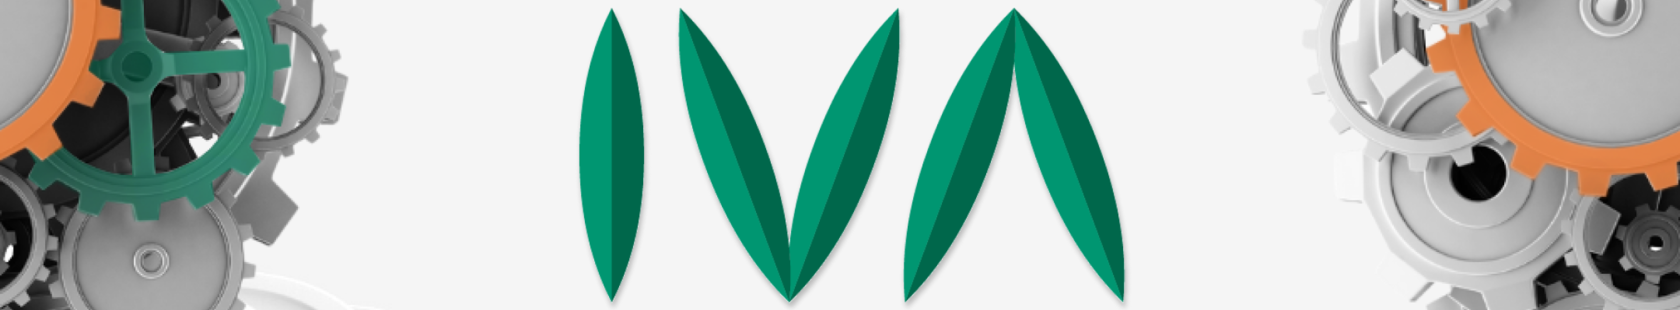 IVA Technologies лого. IVA Technologies. IVA connect заставка. Iva s